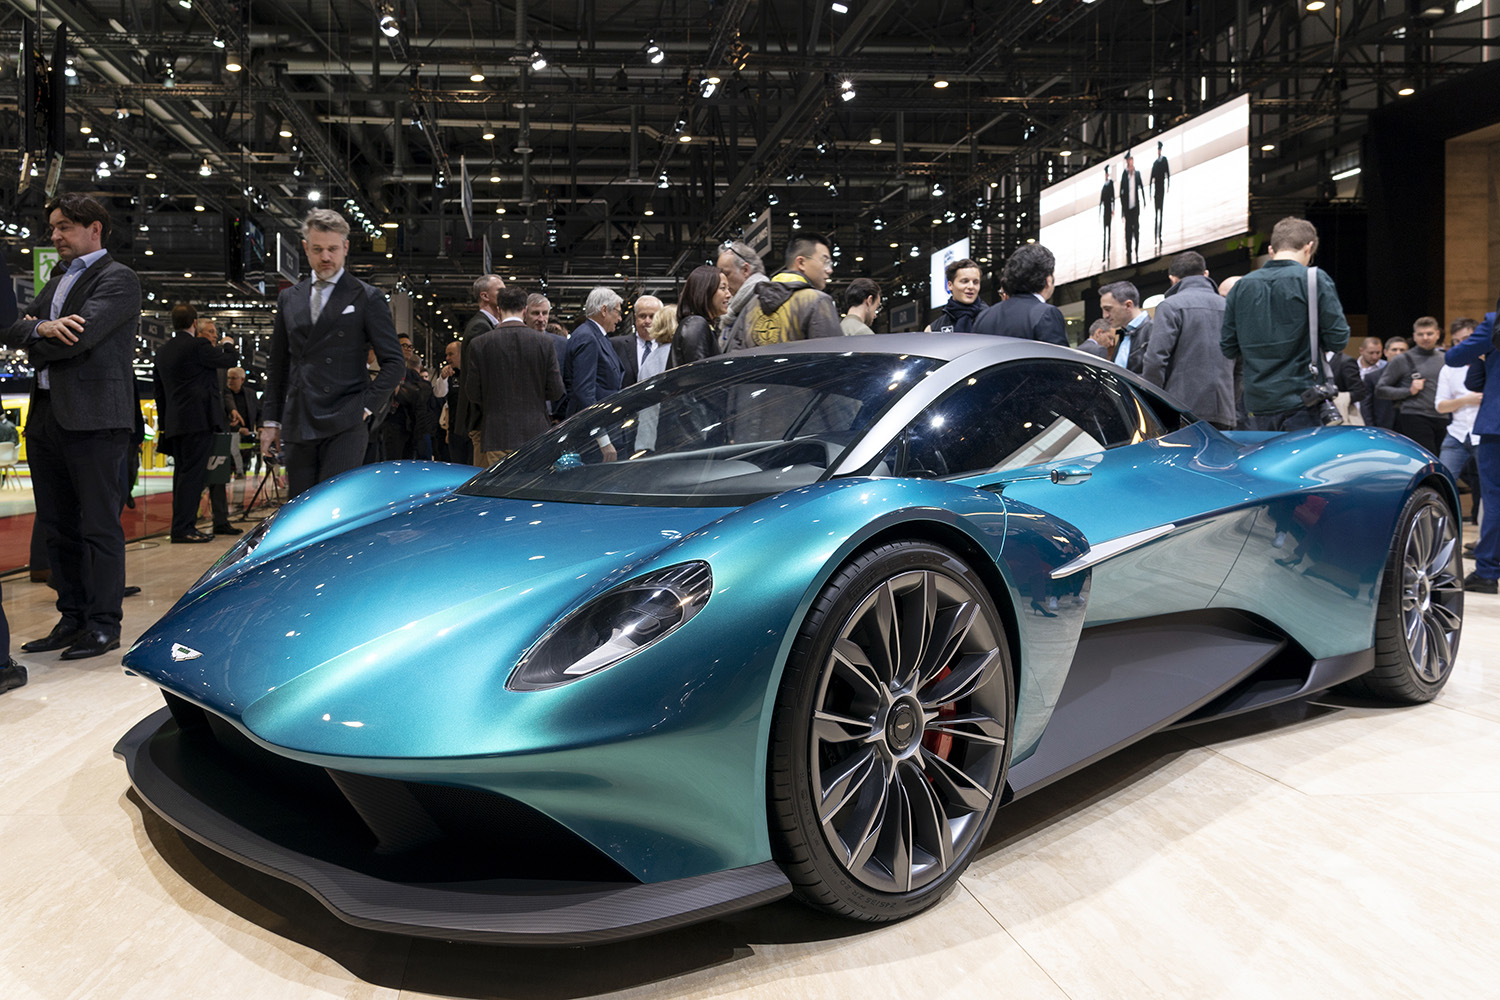 Teal Aston Martin Vanquish Vision concept car at Geneva Motor Show